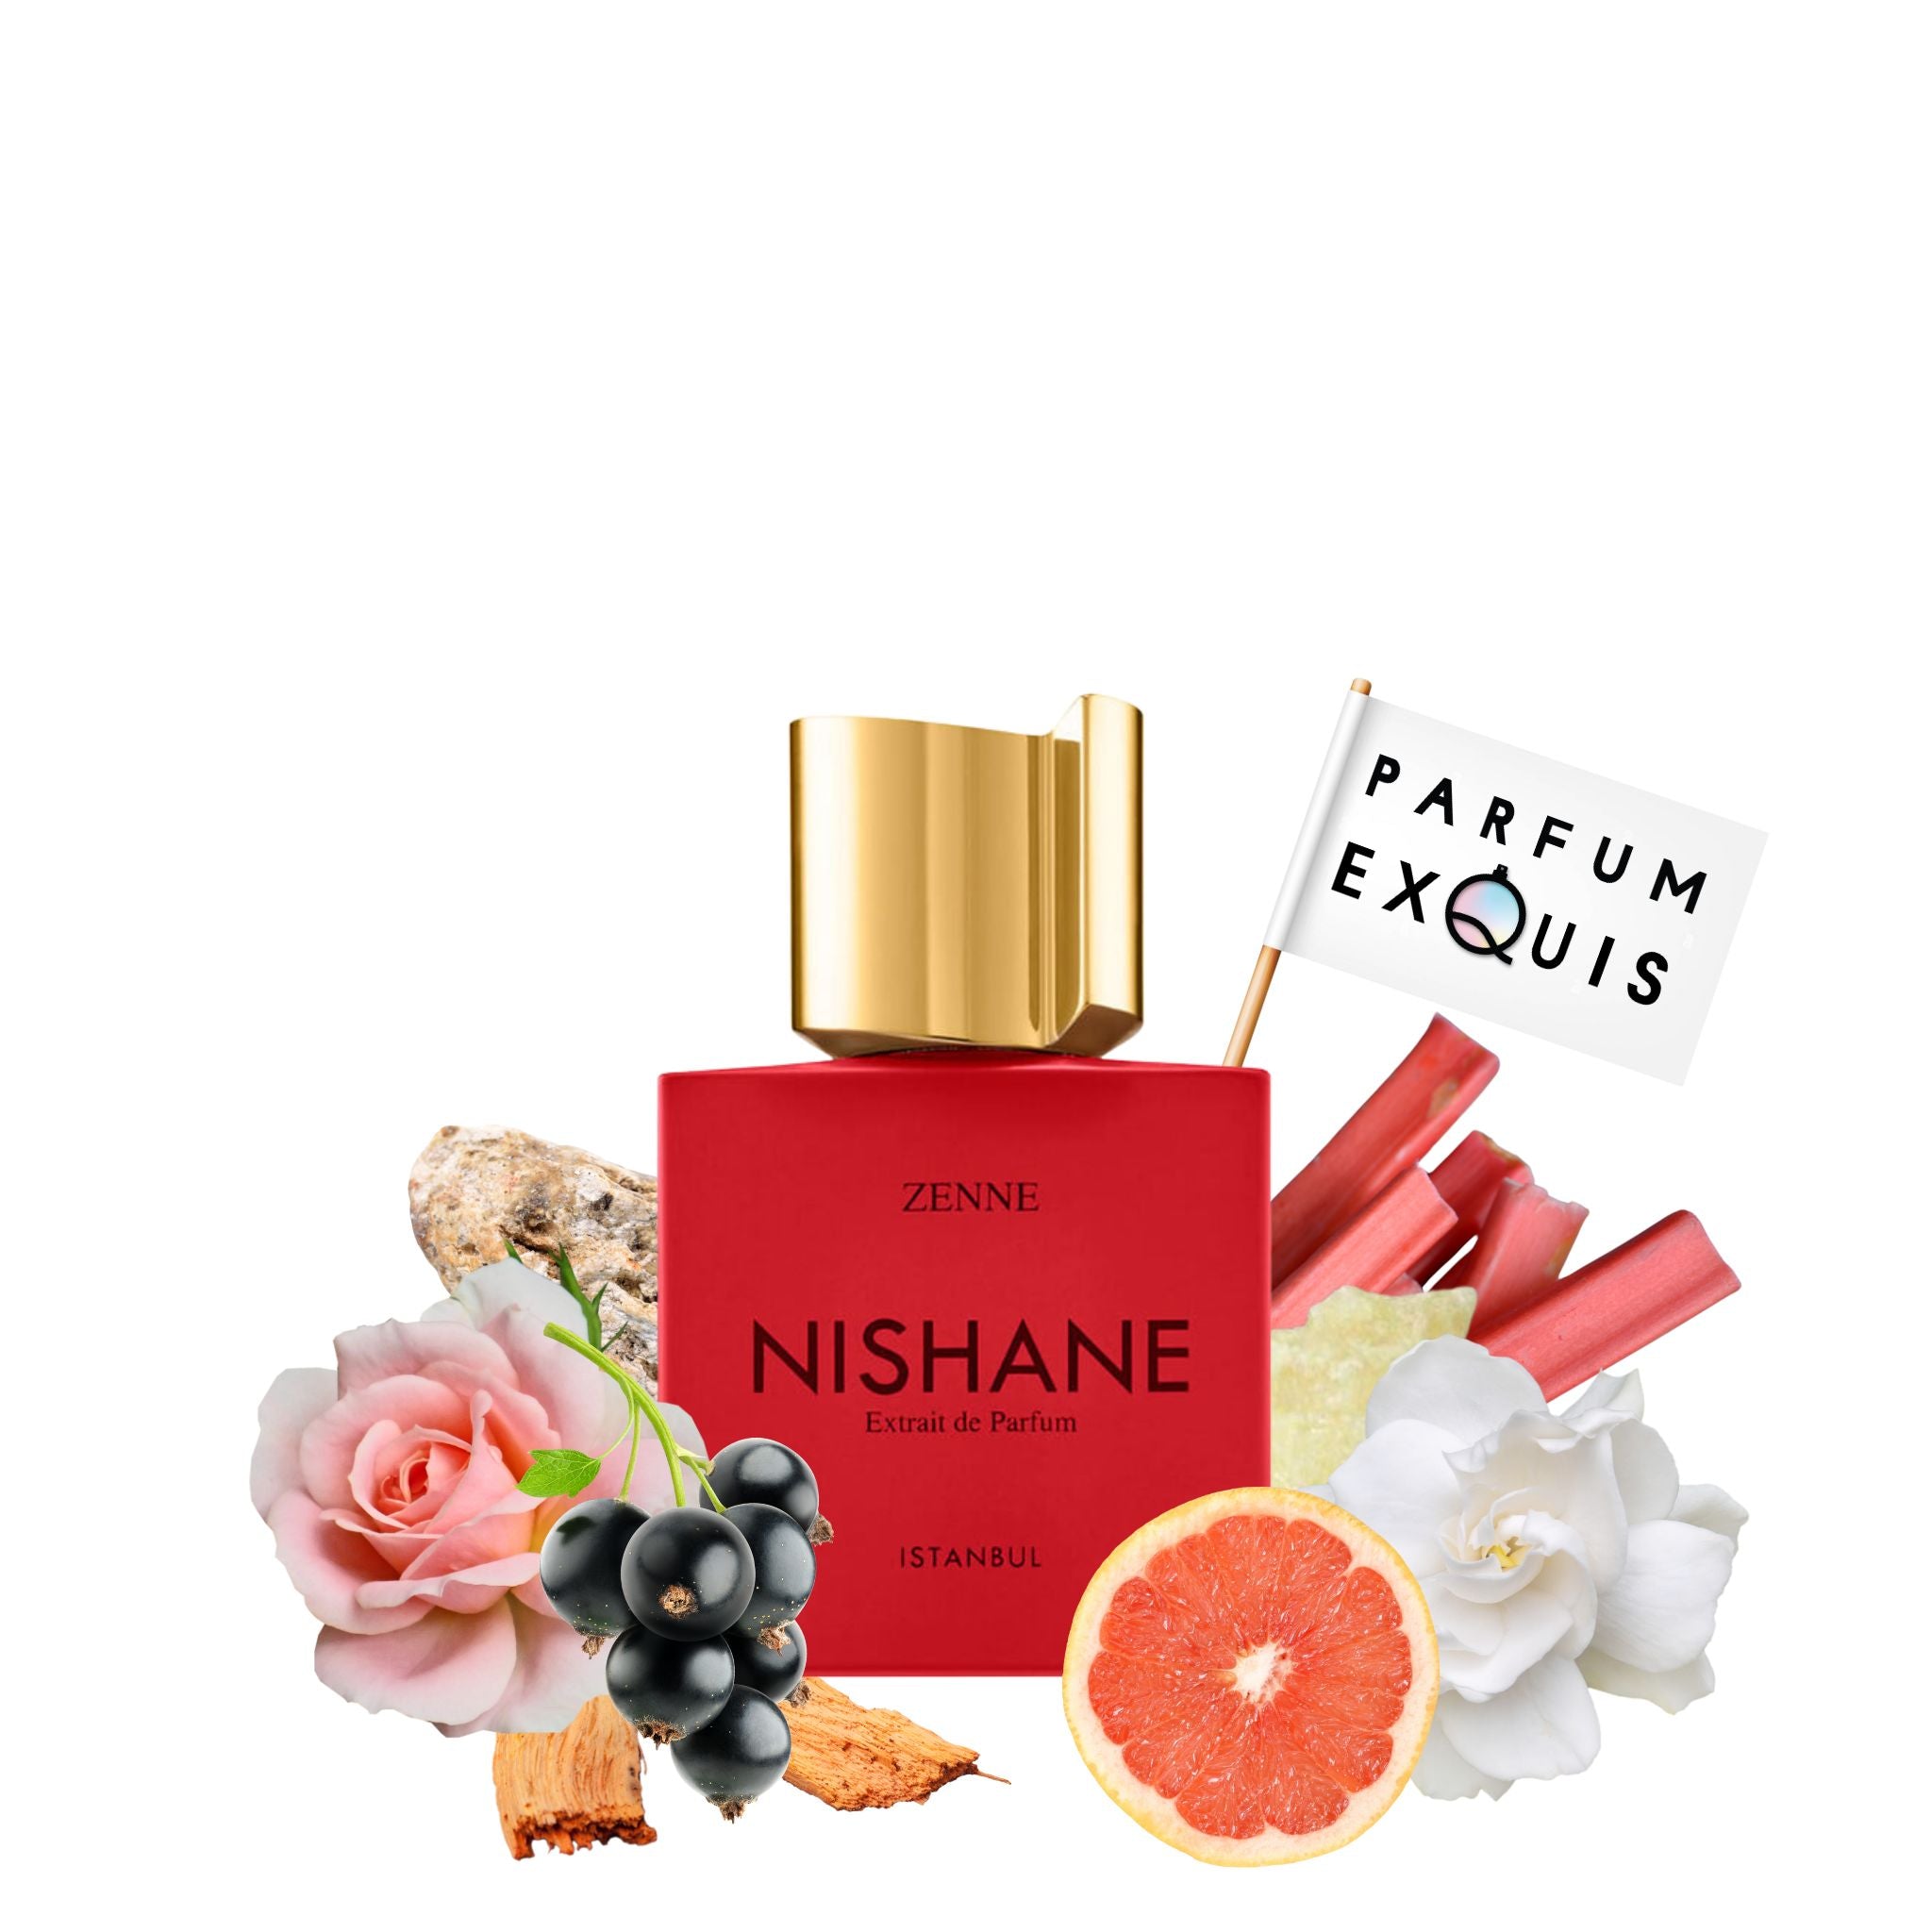 Zenne Nishane fragrance